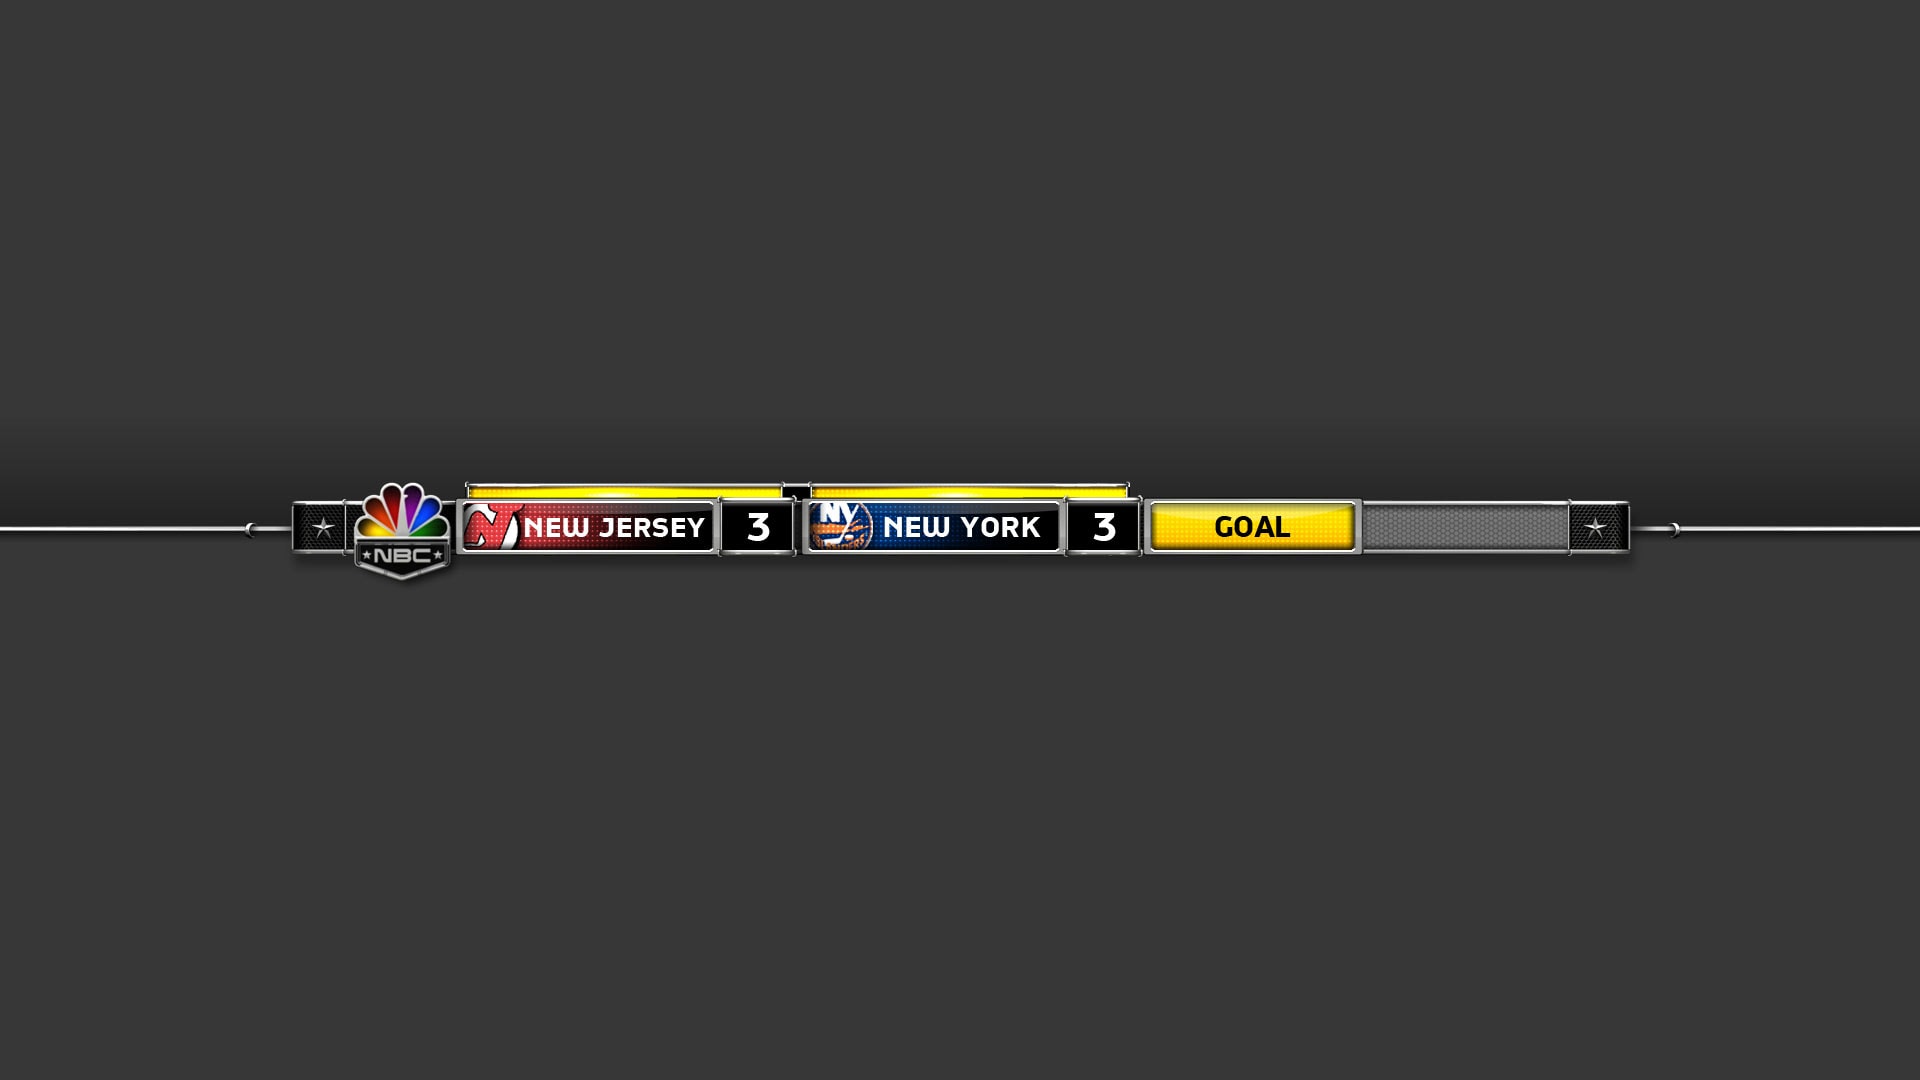 NHL-scorebar-victor-ruano